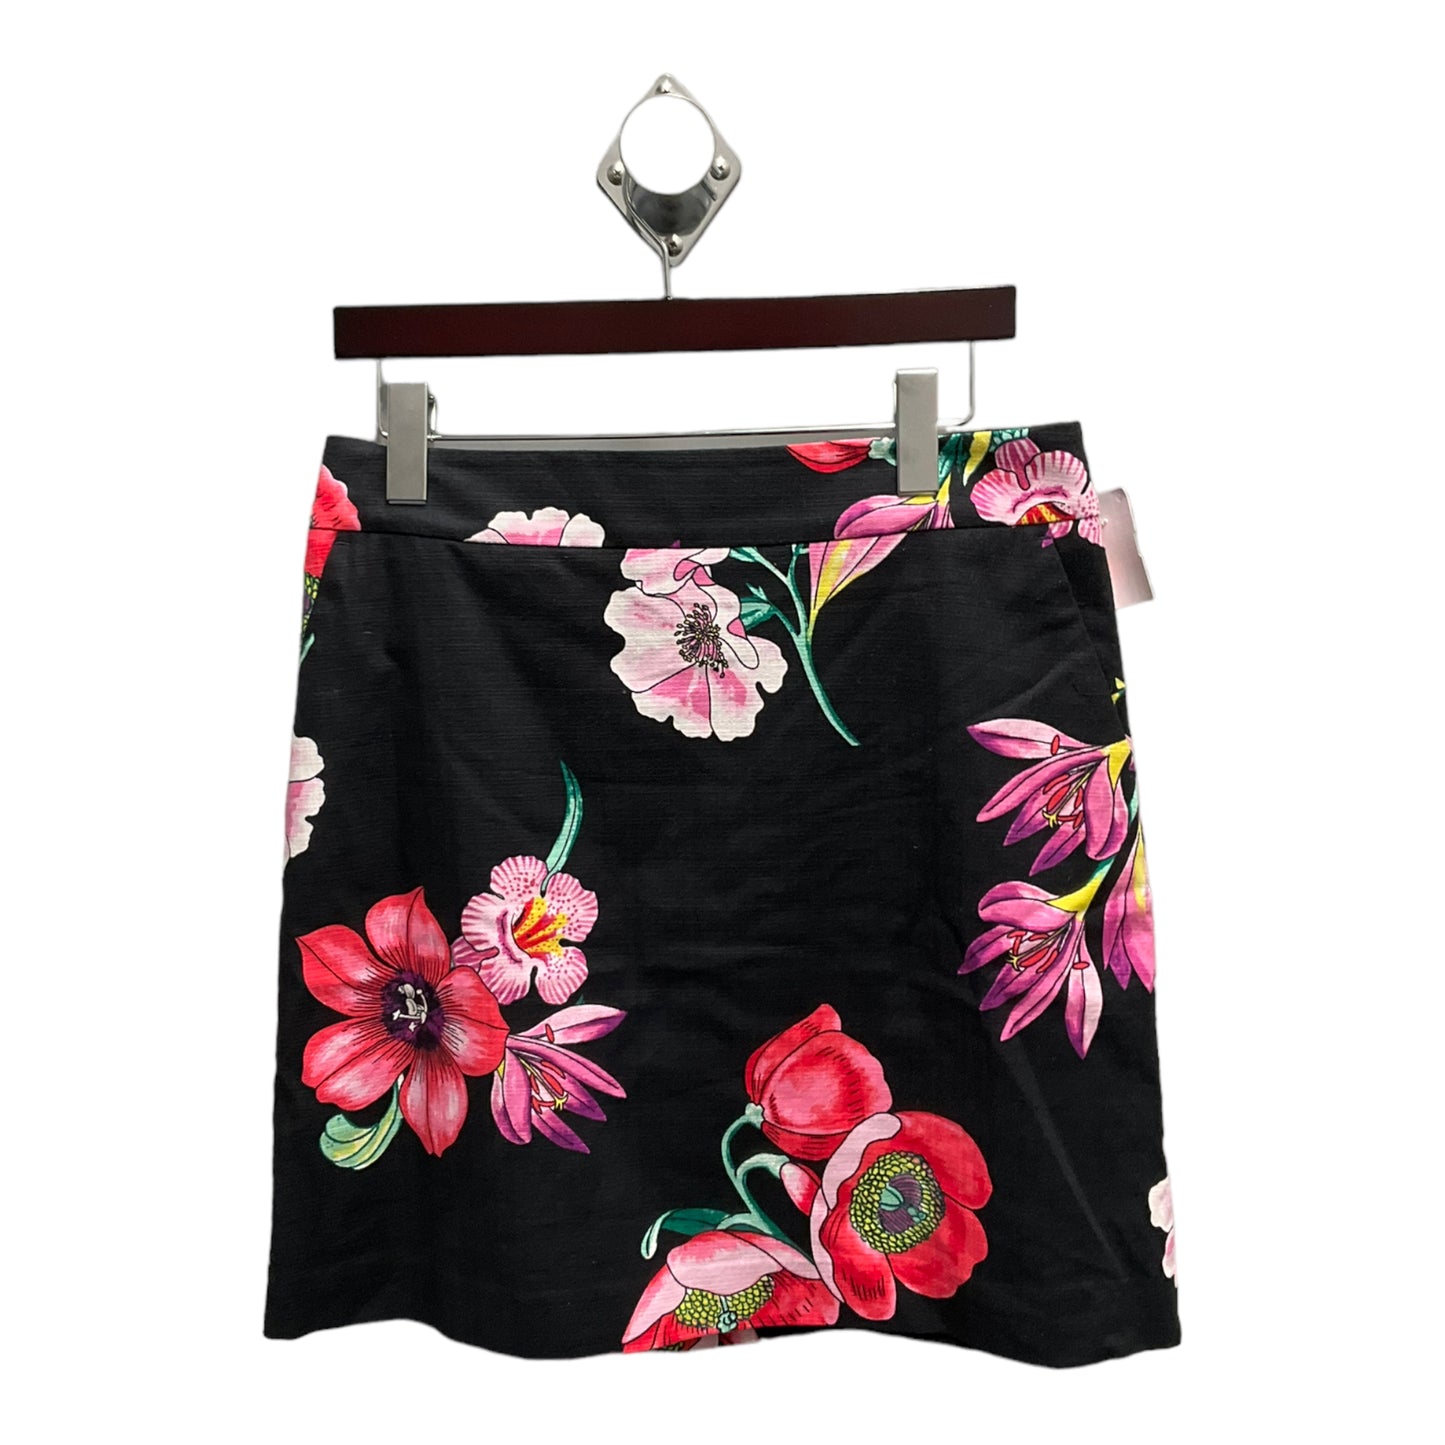 Skirt Mini & Short By Ann Taylor  Size: M